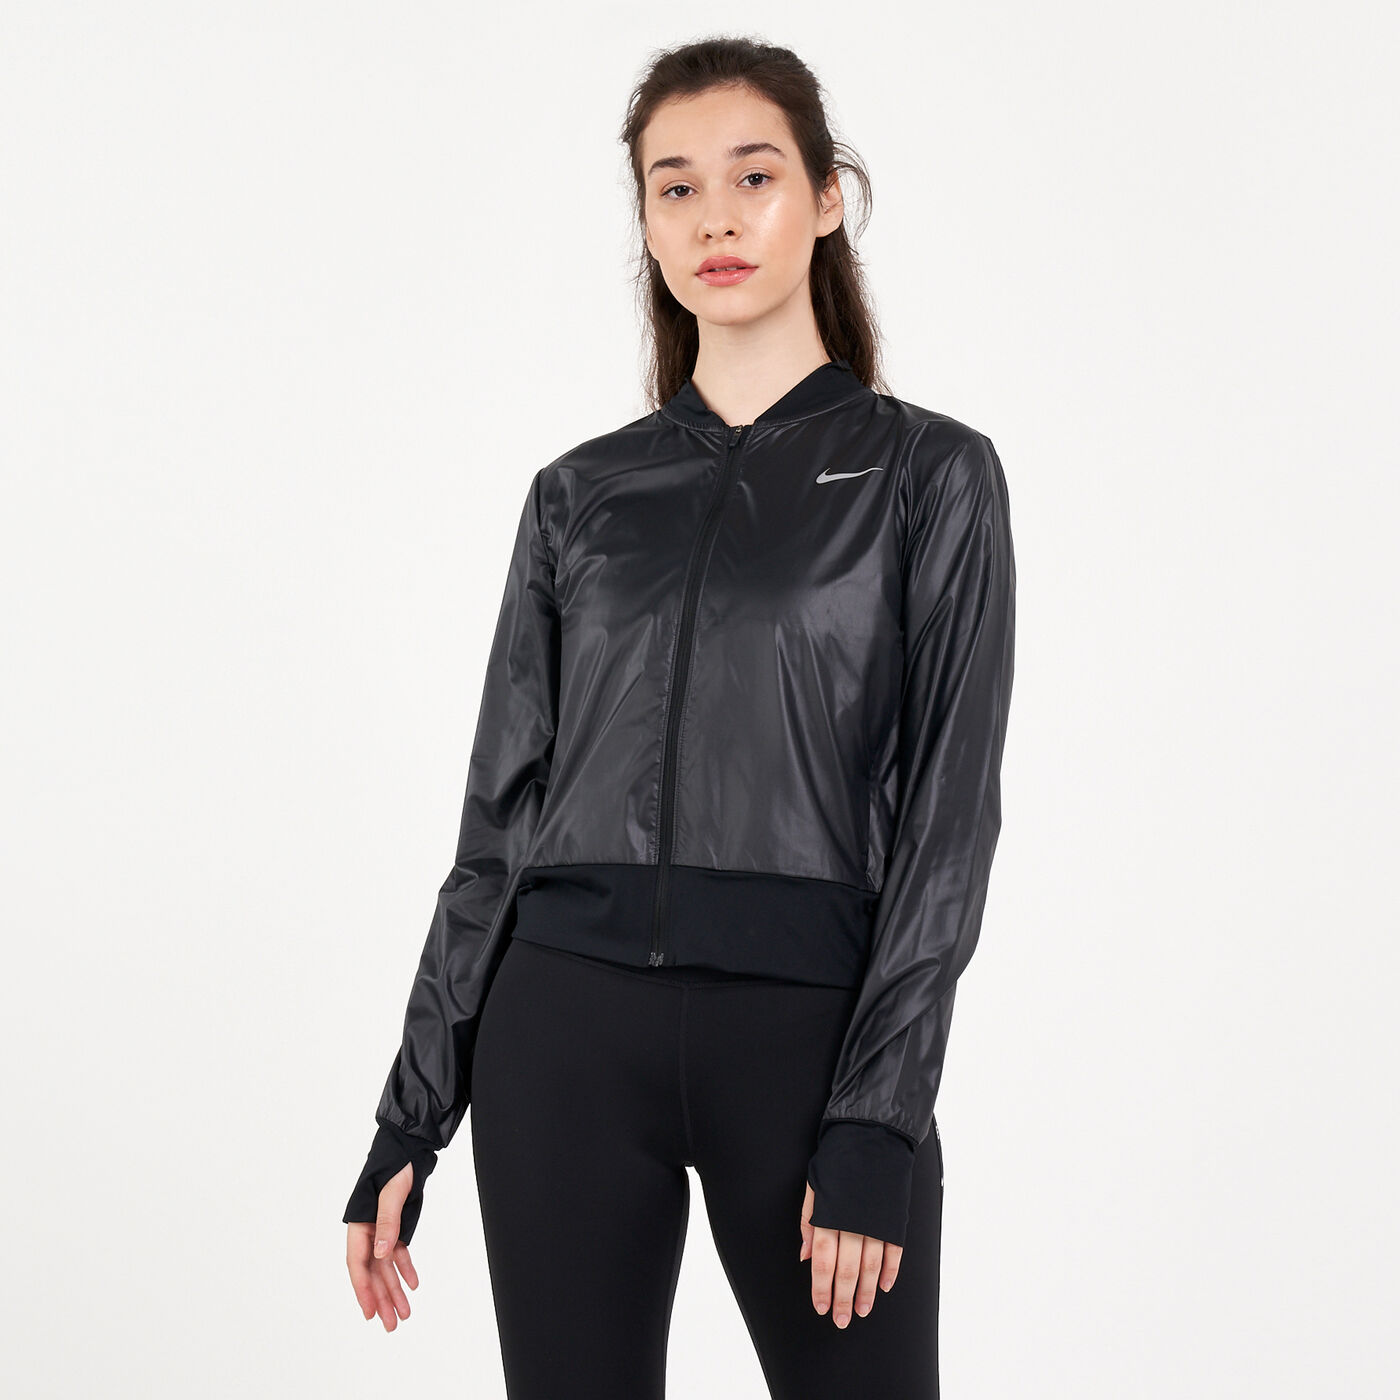 Women's Full-Zip Running Jacket